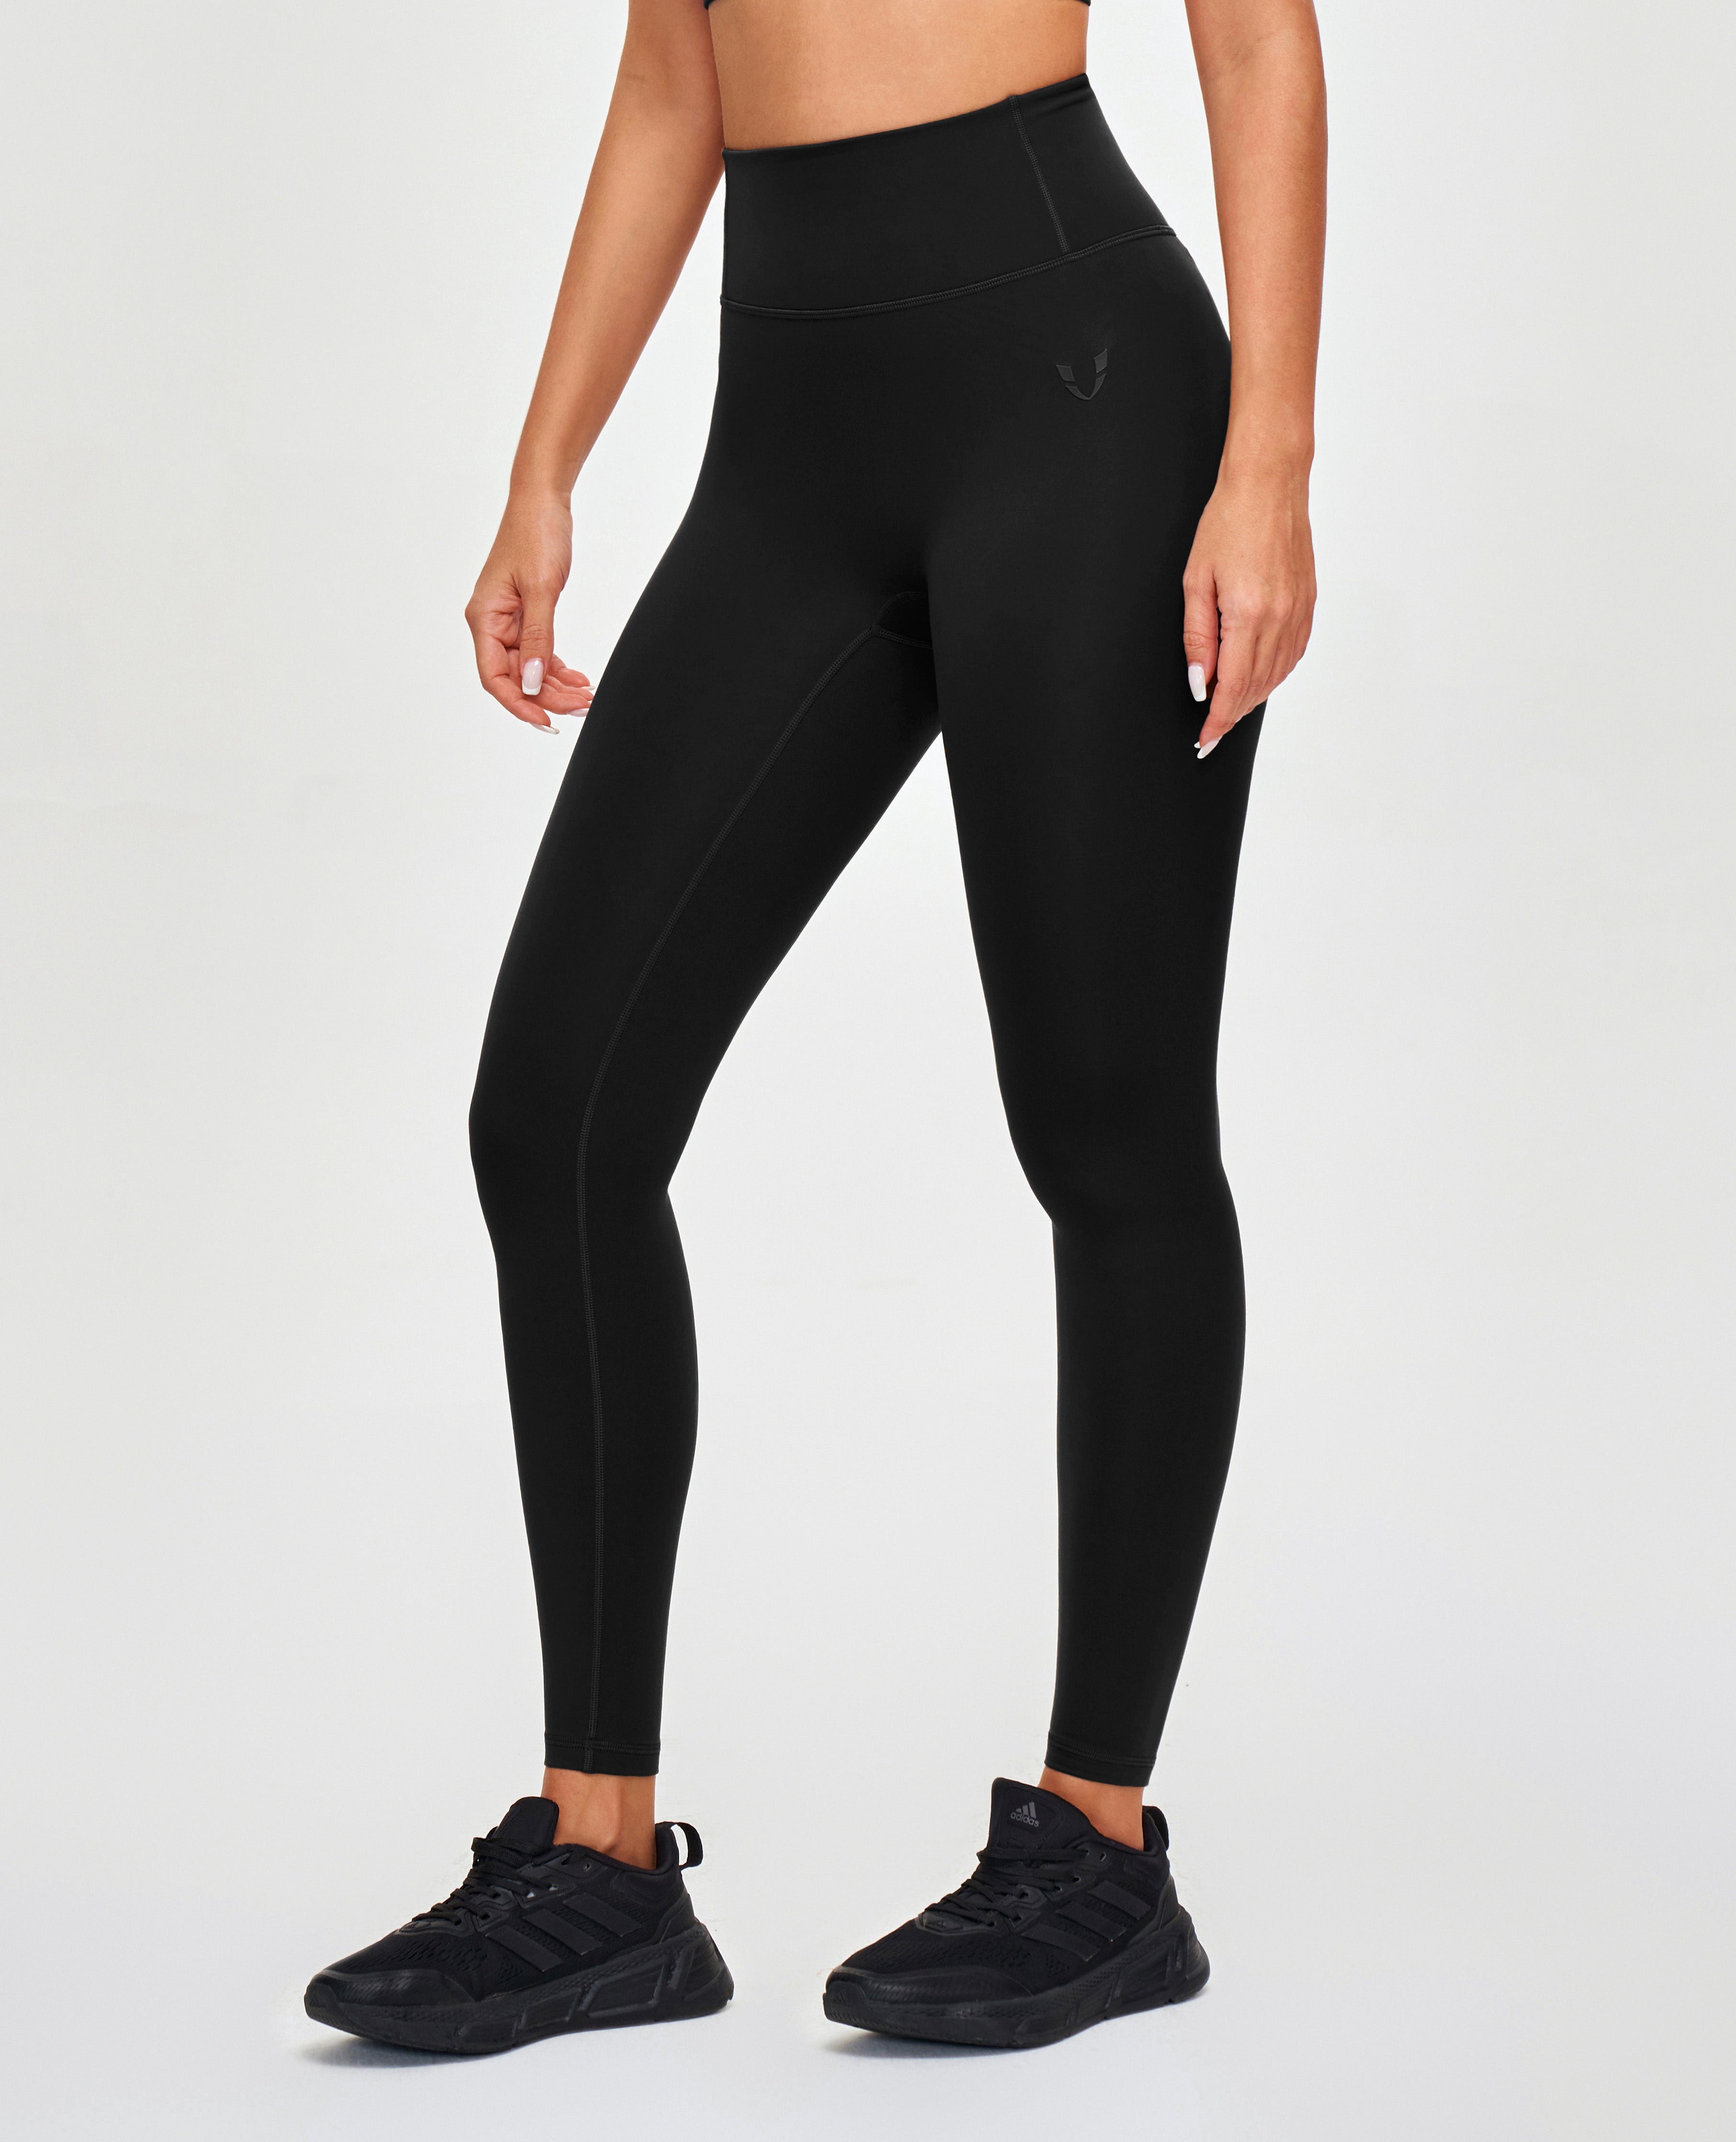 CORE, BASIC TIGHTS - Cropped basic workout leggings - Black - Sz